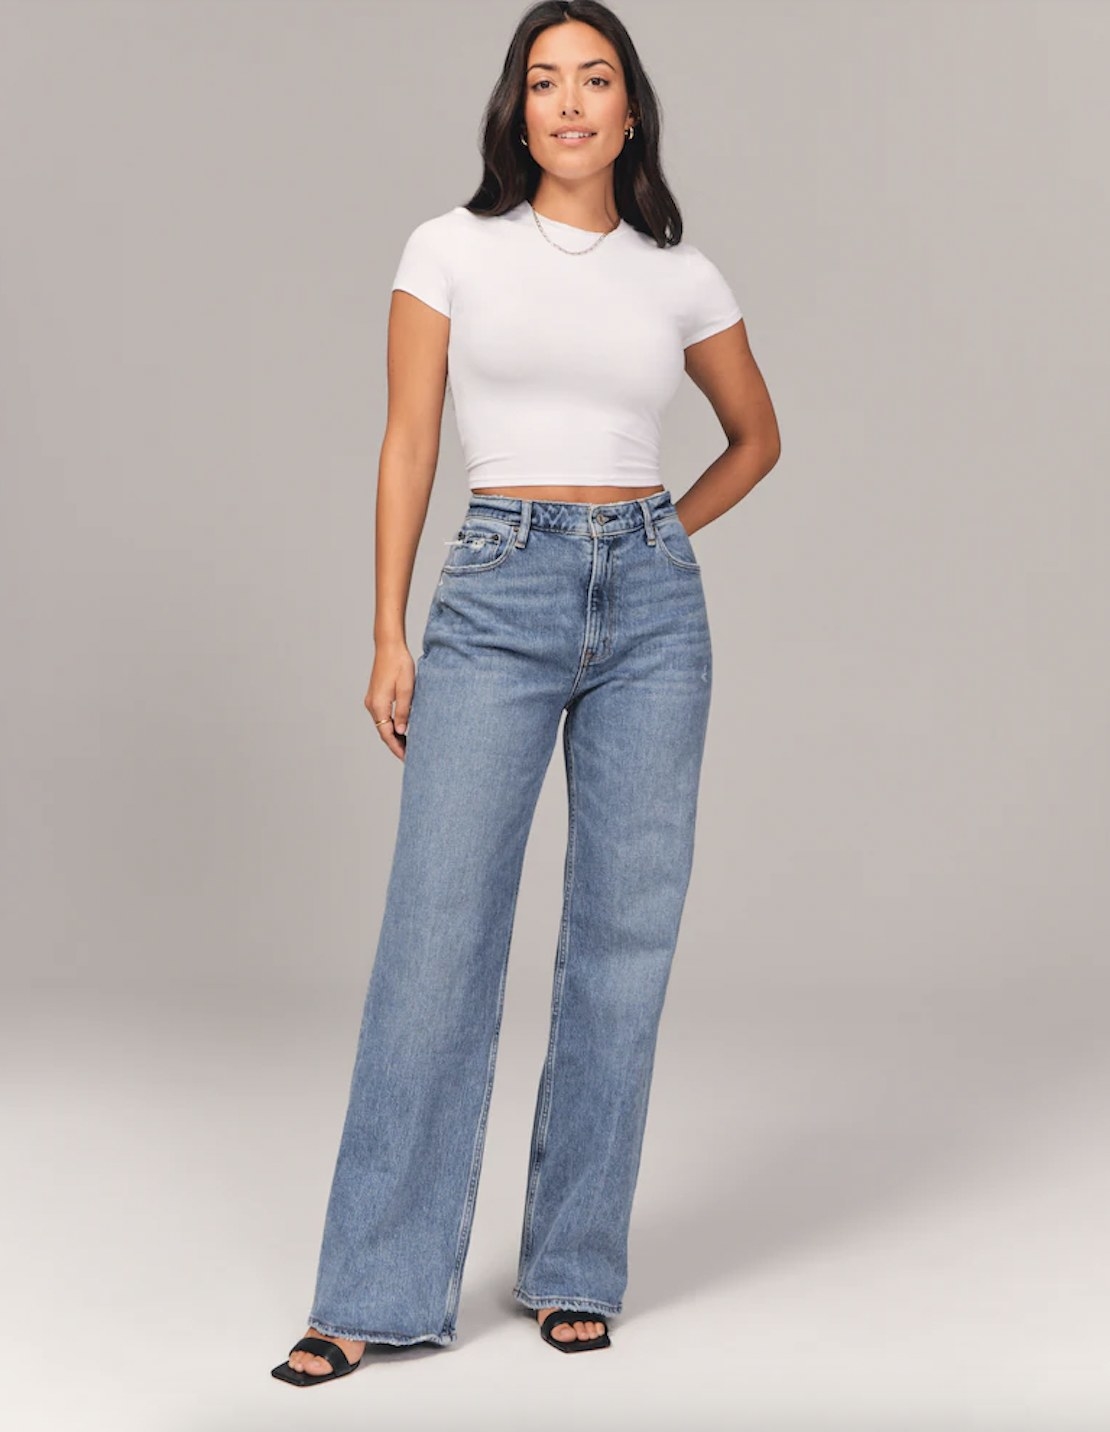 model wearing the jeans